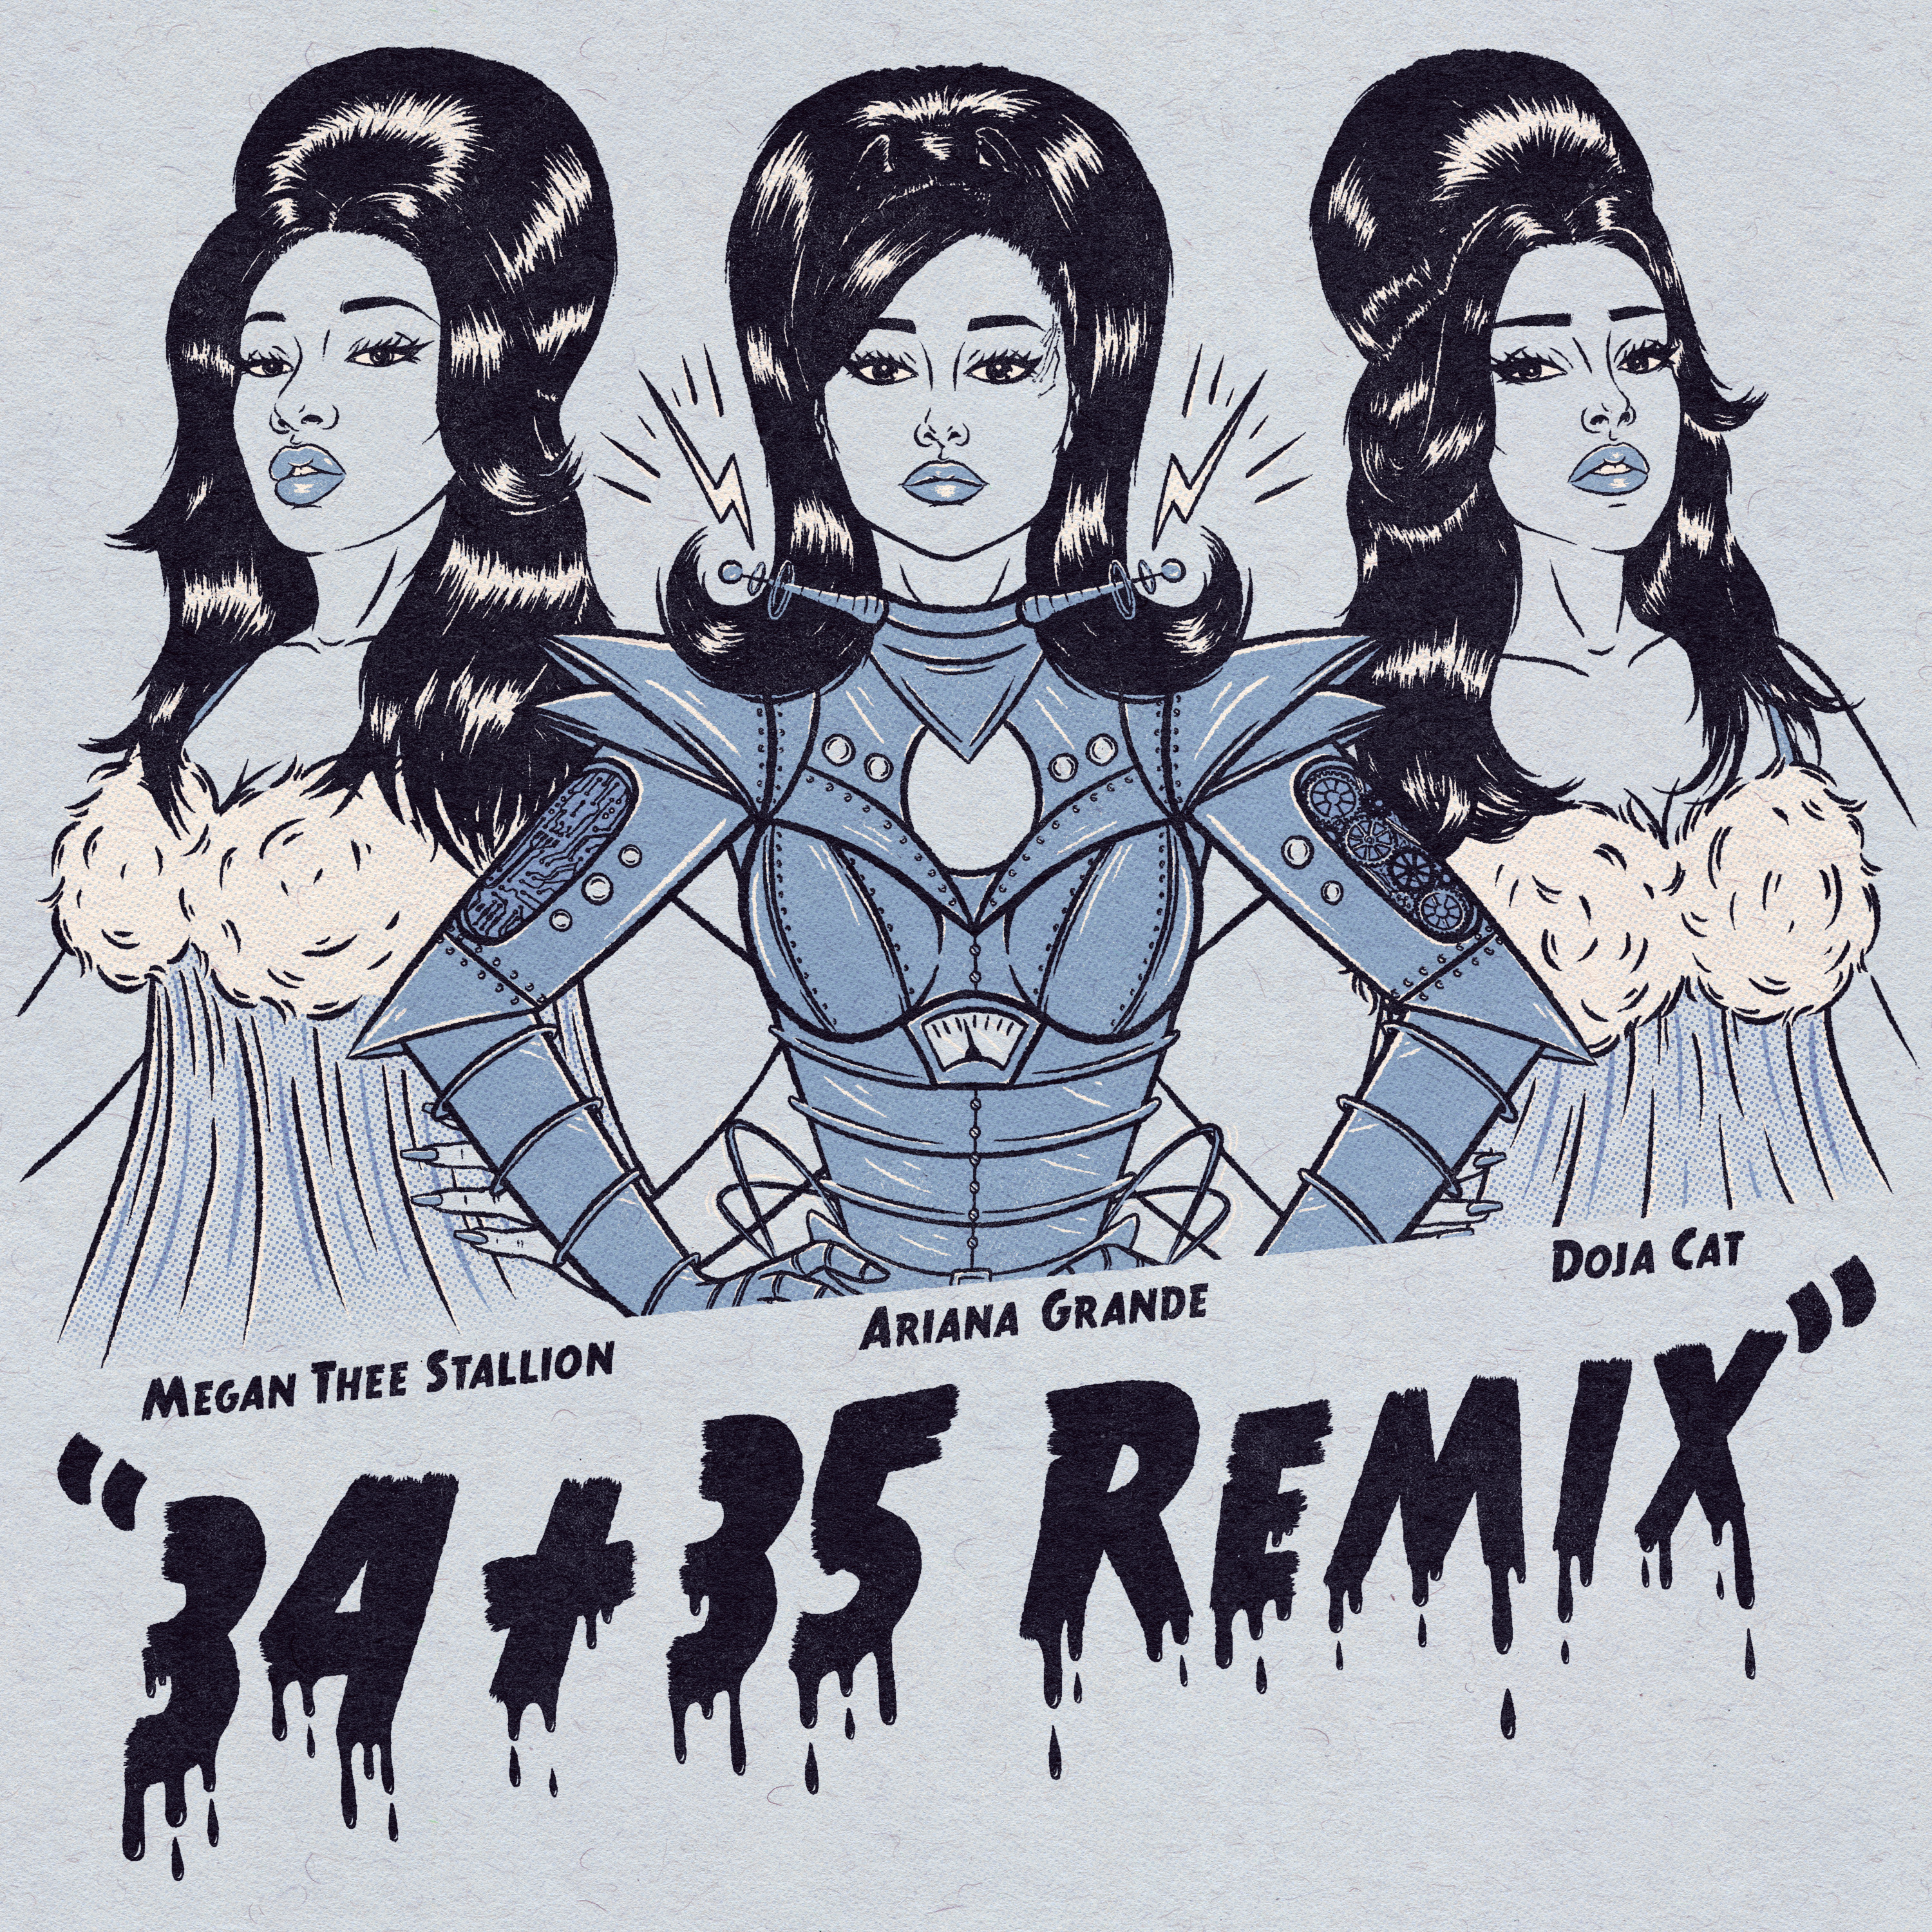 Ariana Grande featuring Doja Cat & Megan Thee Stallion — 34+35 (Remix) cover artwork